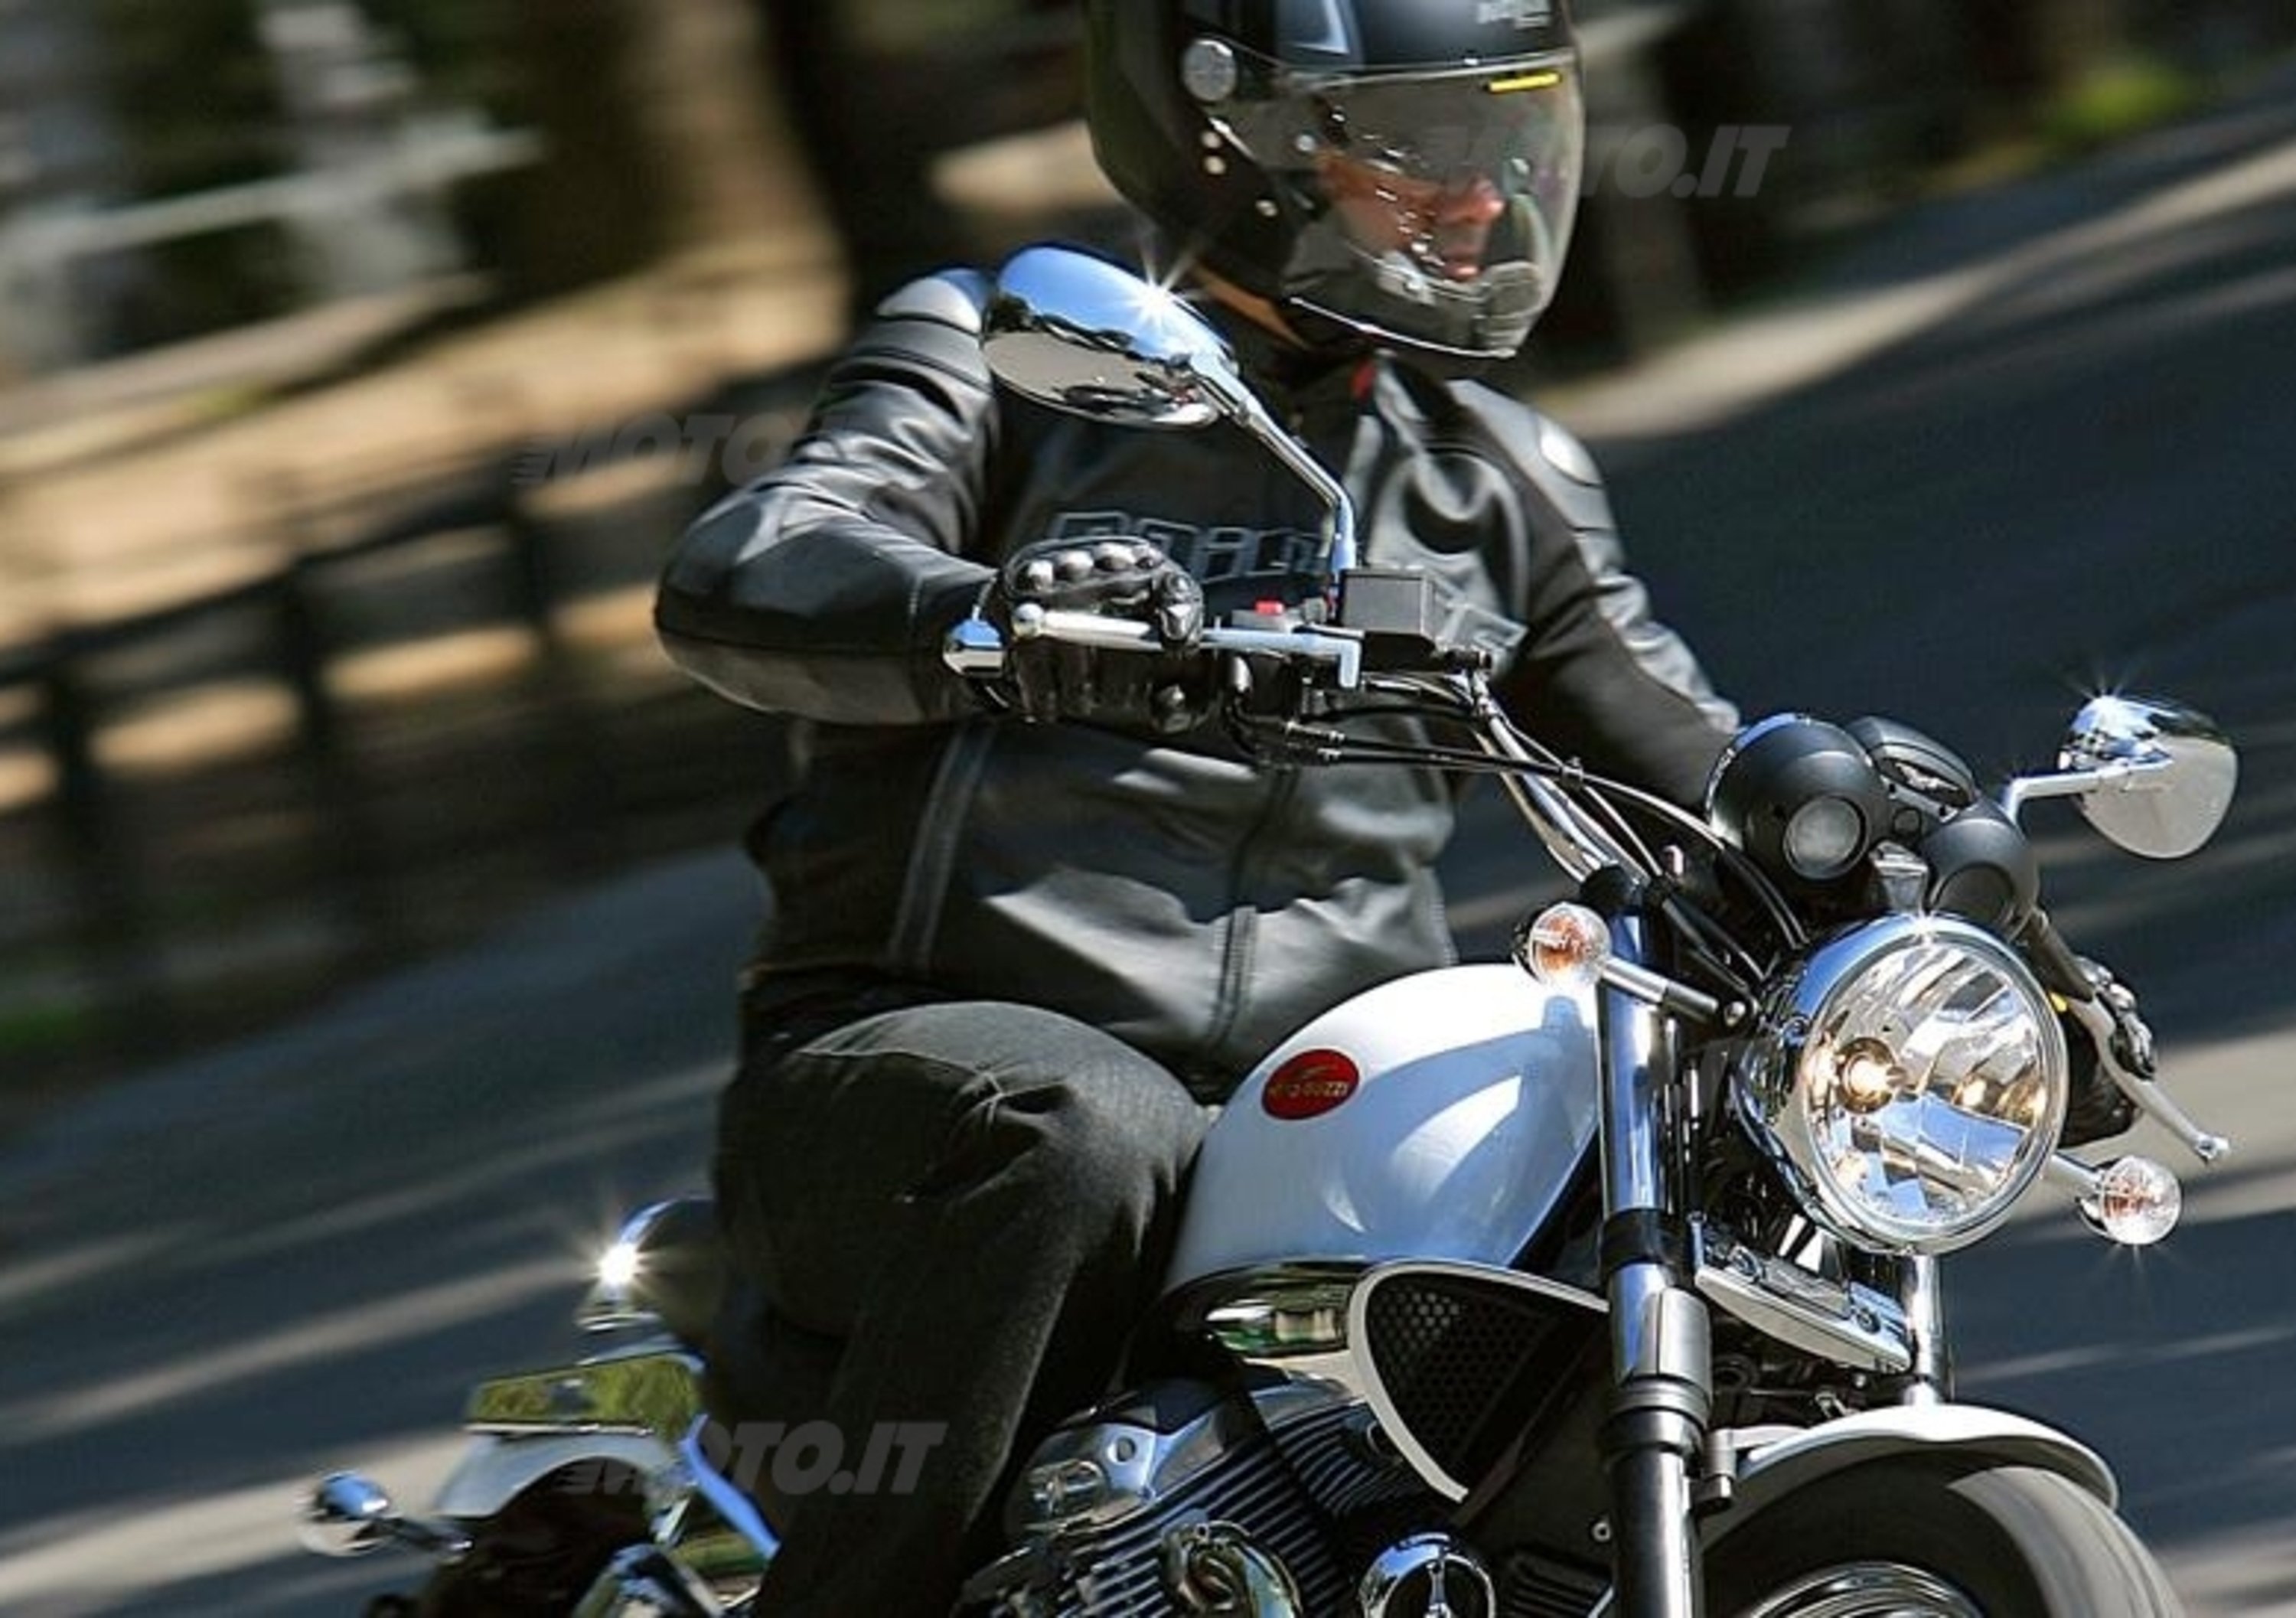 Moto Guzzi Nevada 750 Classic 